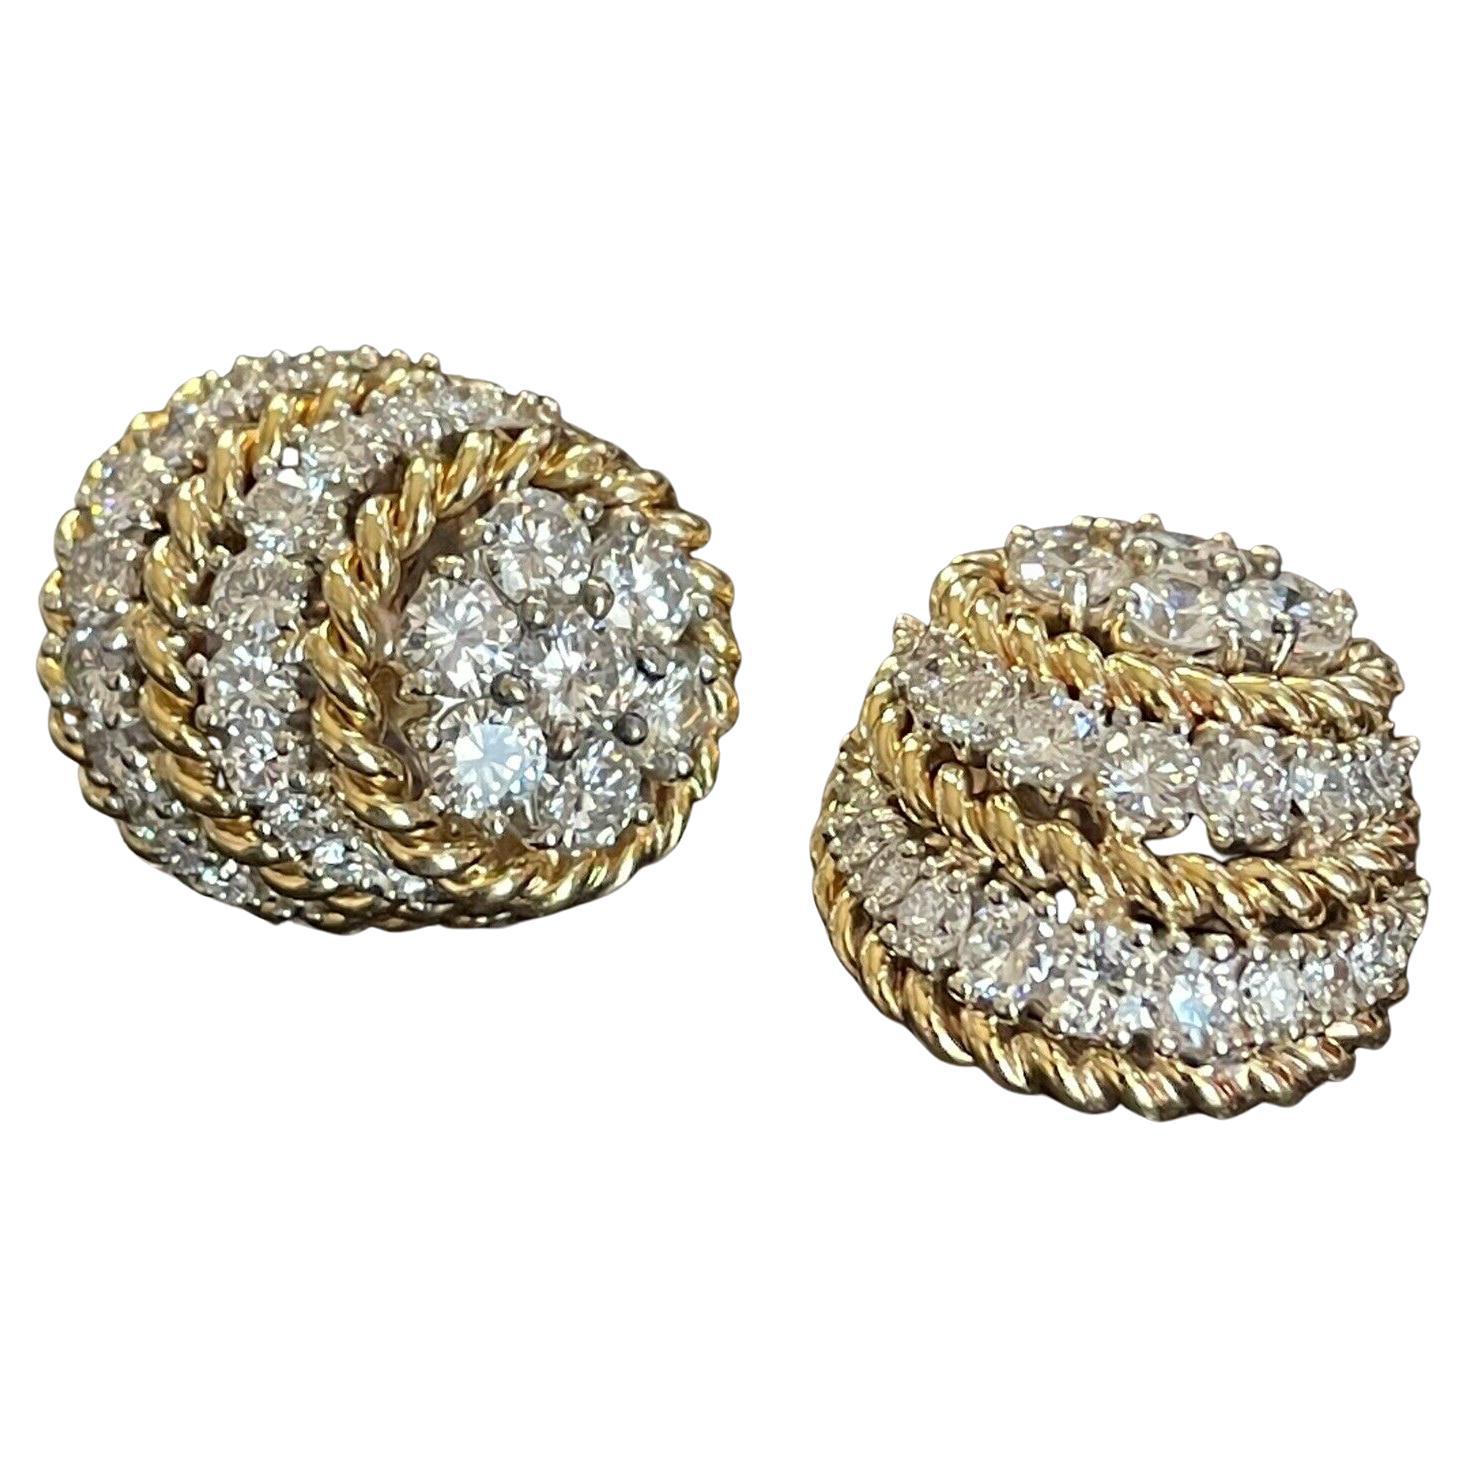 $26000 / 8.5 CT Diamond 'IF-VVS/D' Statement Earrings / 18K Gold / Top Luxury For Sale